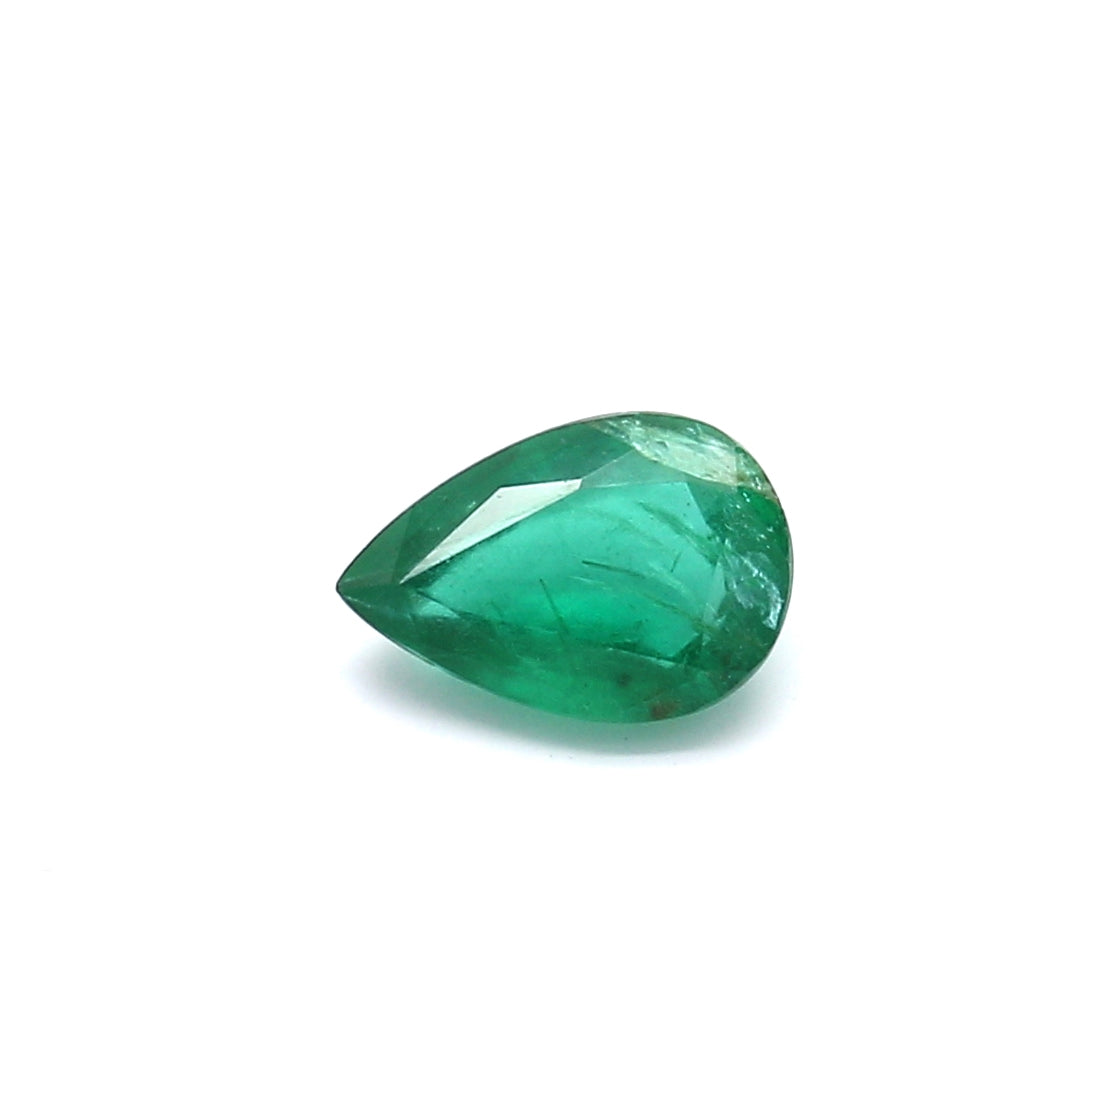 0.84ct Pear Shape Emerald, Moderate Oil, Zimbabwe - 8.02 x 5.47 x 3.15mm